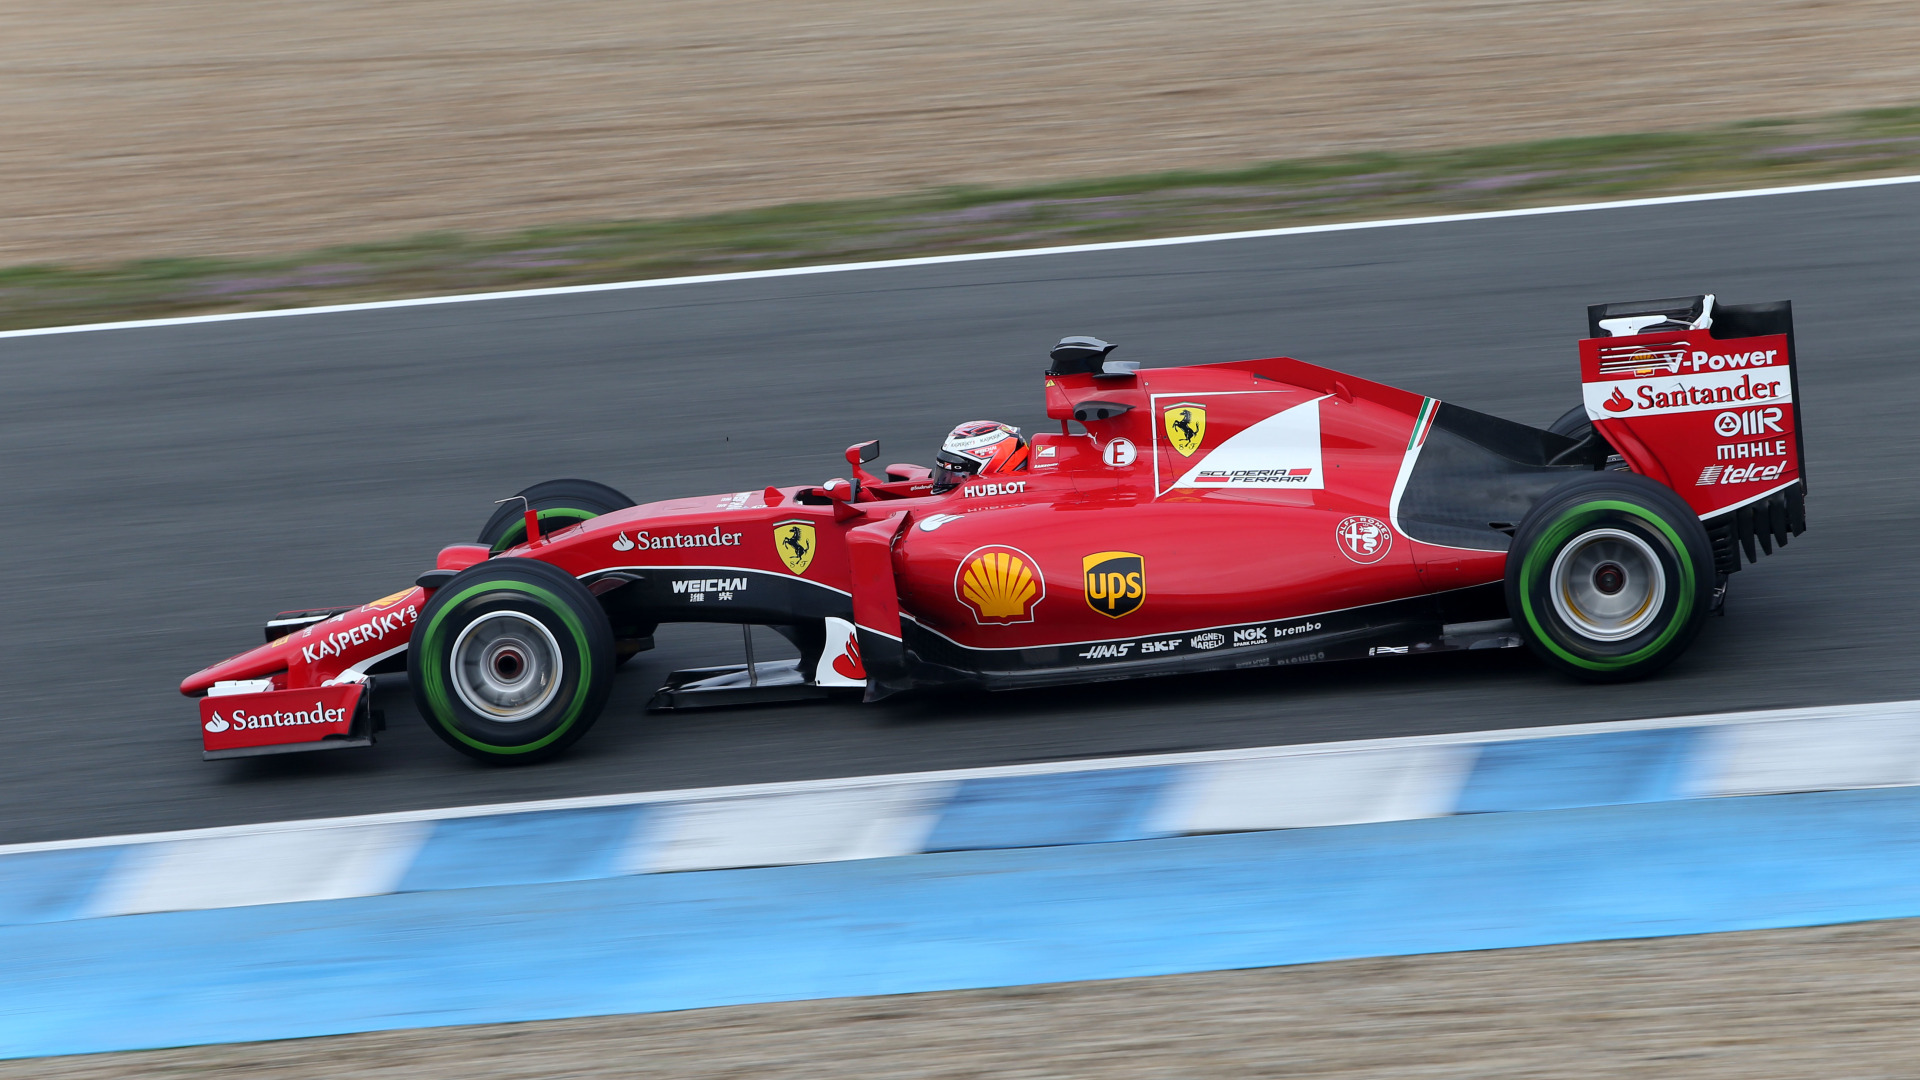 Download Wallpaper Ferrari Kimi Raikkonen Also Formula 1 2015 Tests Sf15t Section Sports